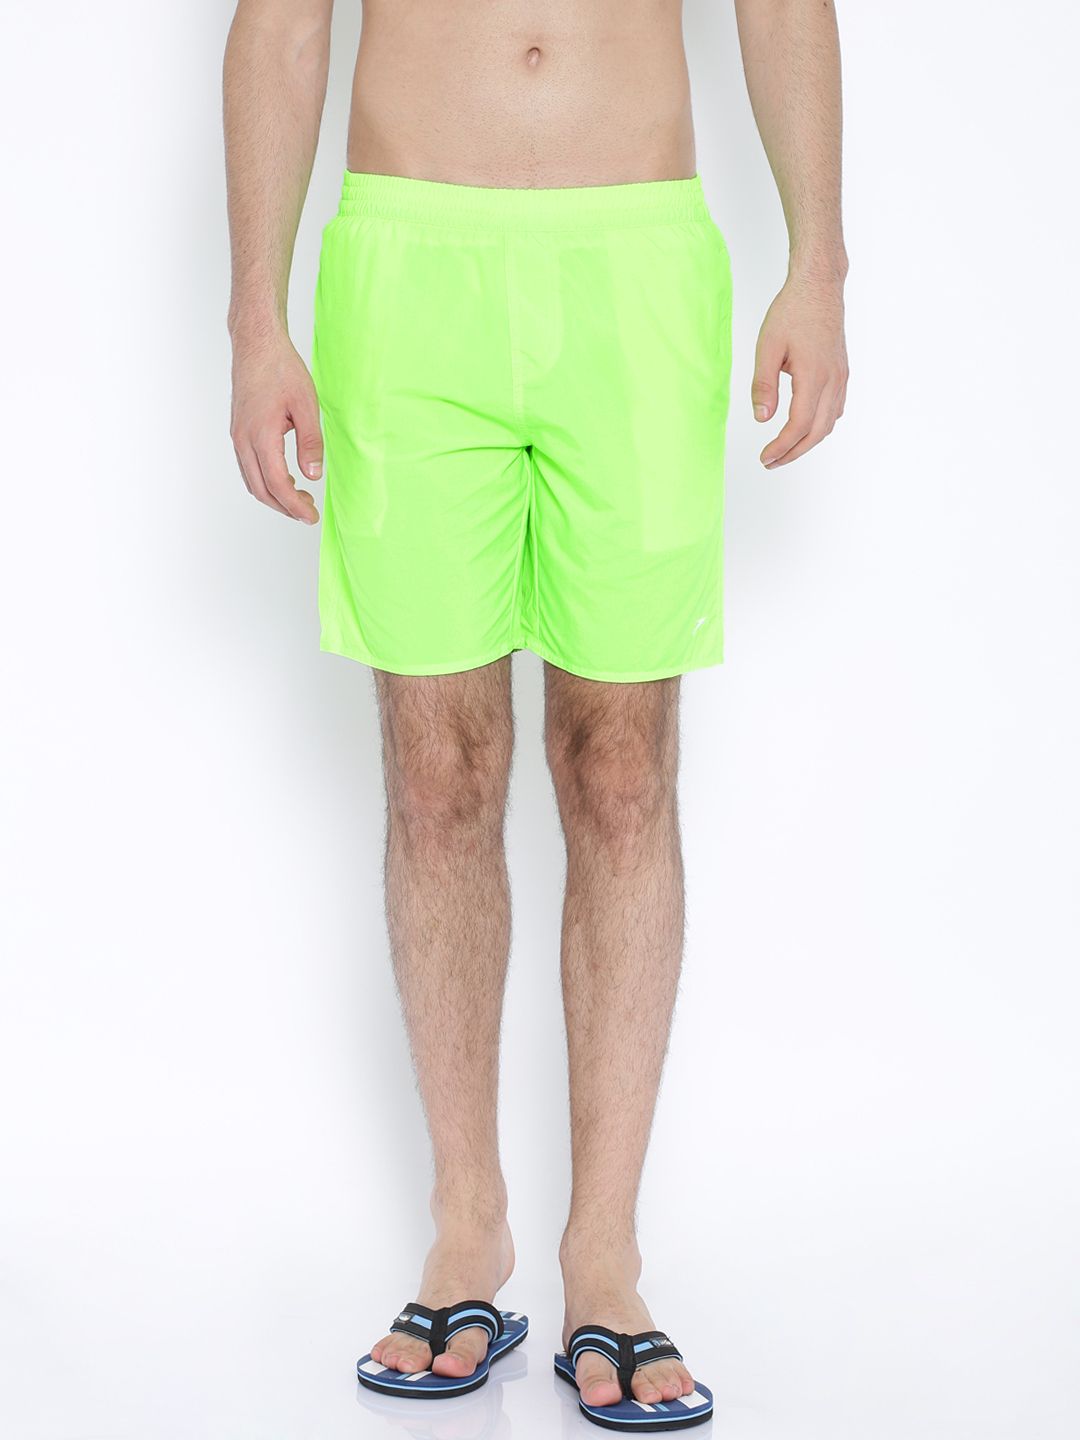 Buy Speedo Fluorescent Green Swim Shorts 807881A878 - Apparel for Men